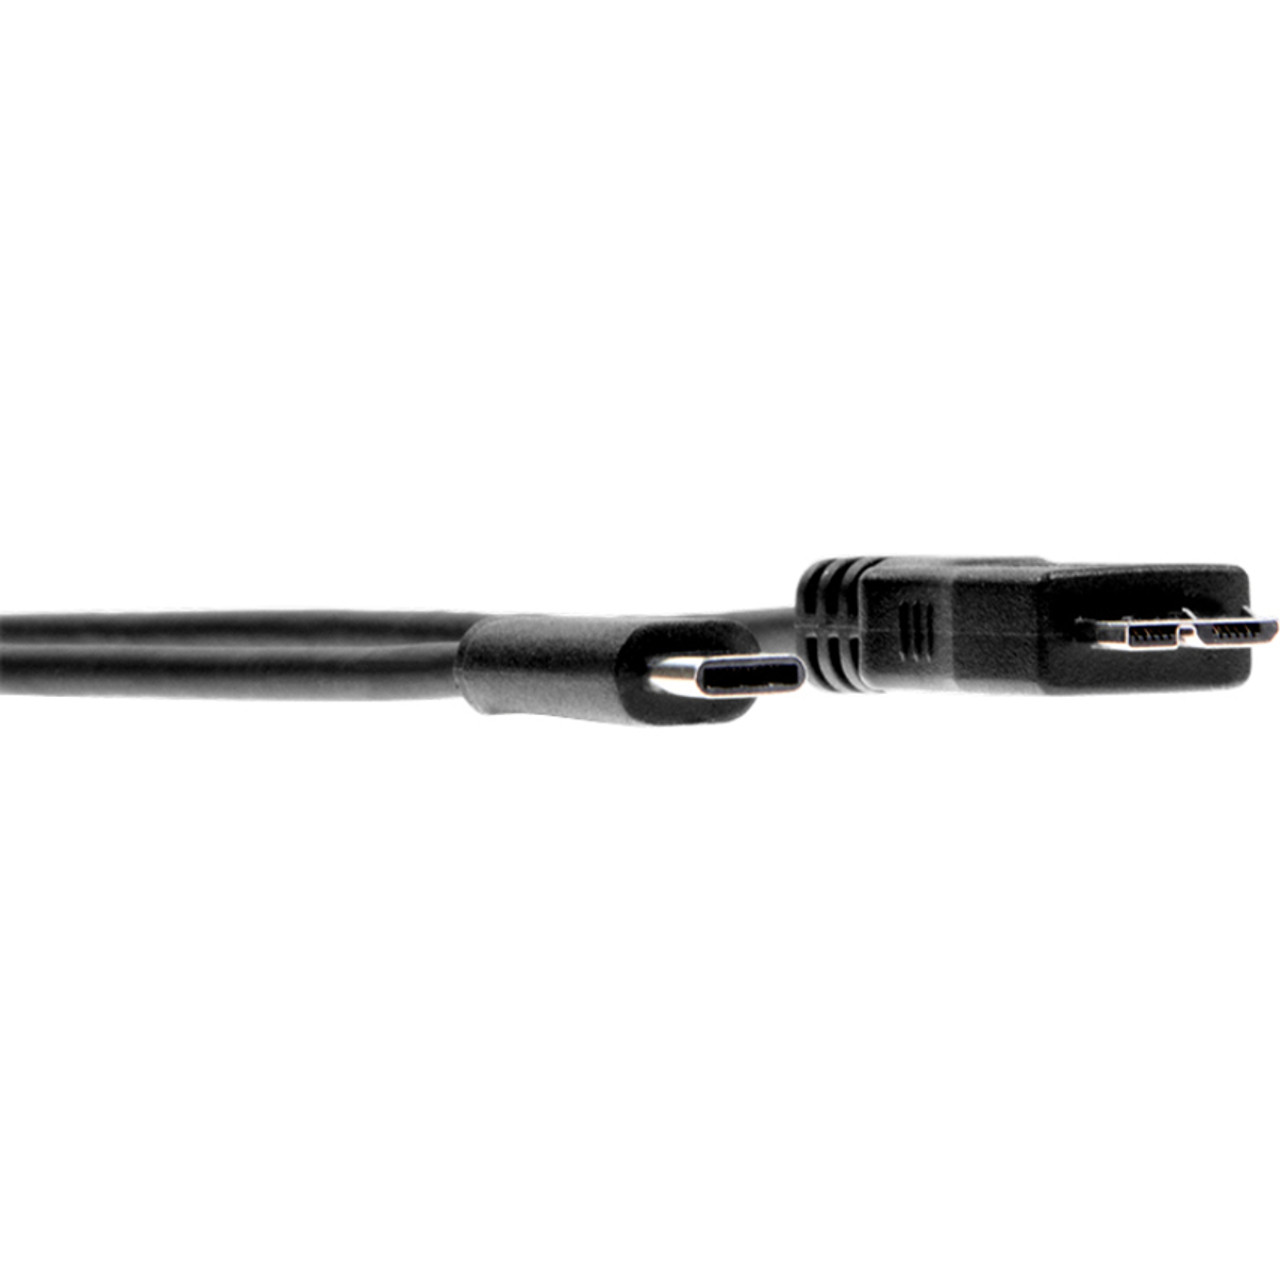 Rocstor Premium USB-C to Micro-B Cable - Black - 3ft